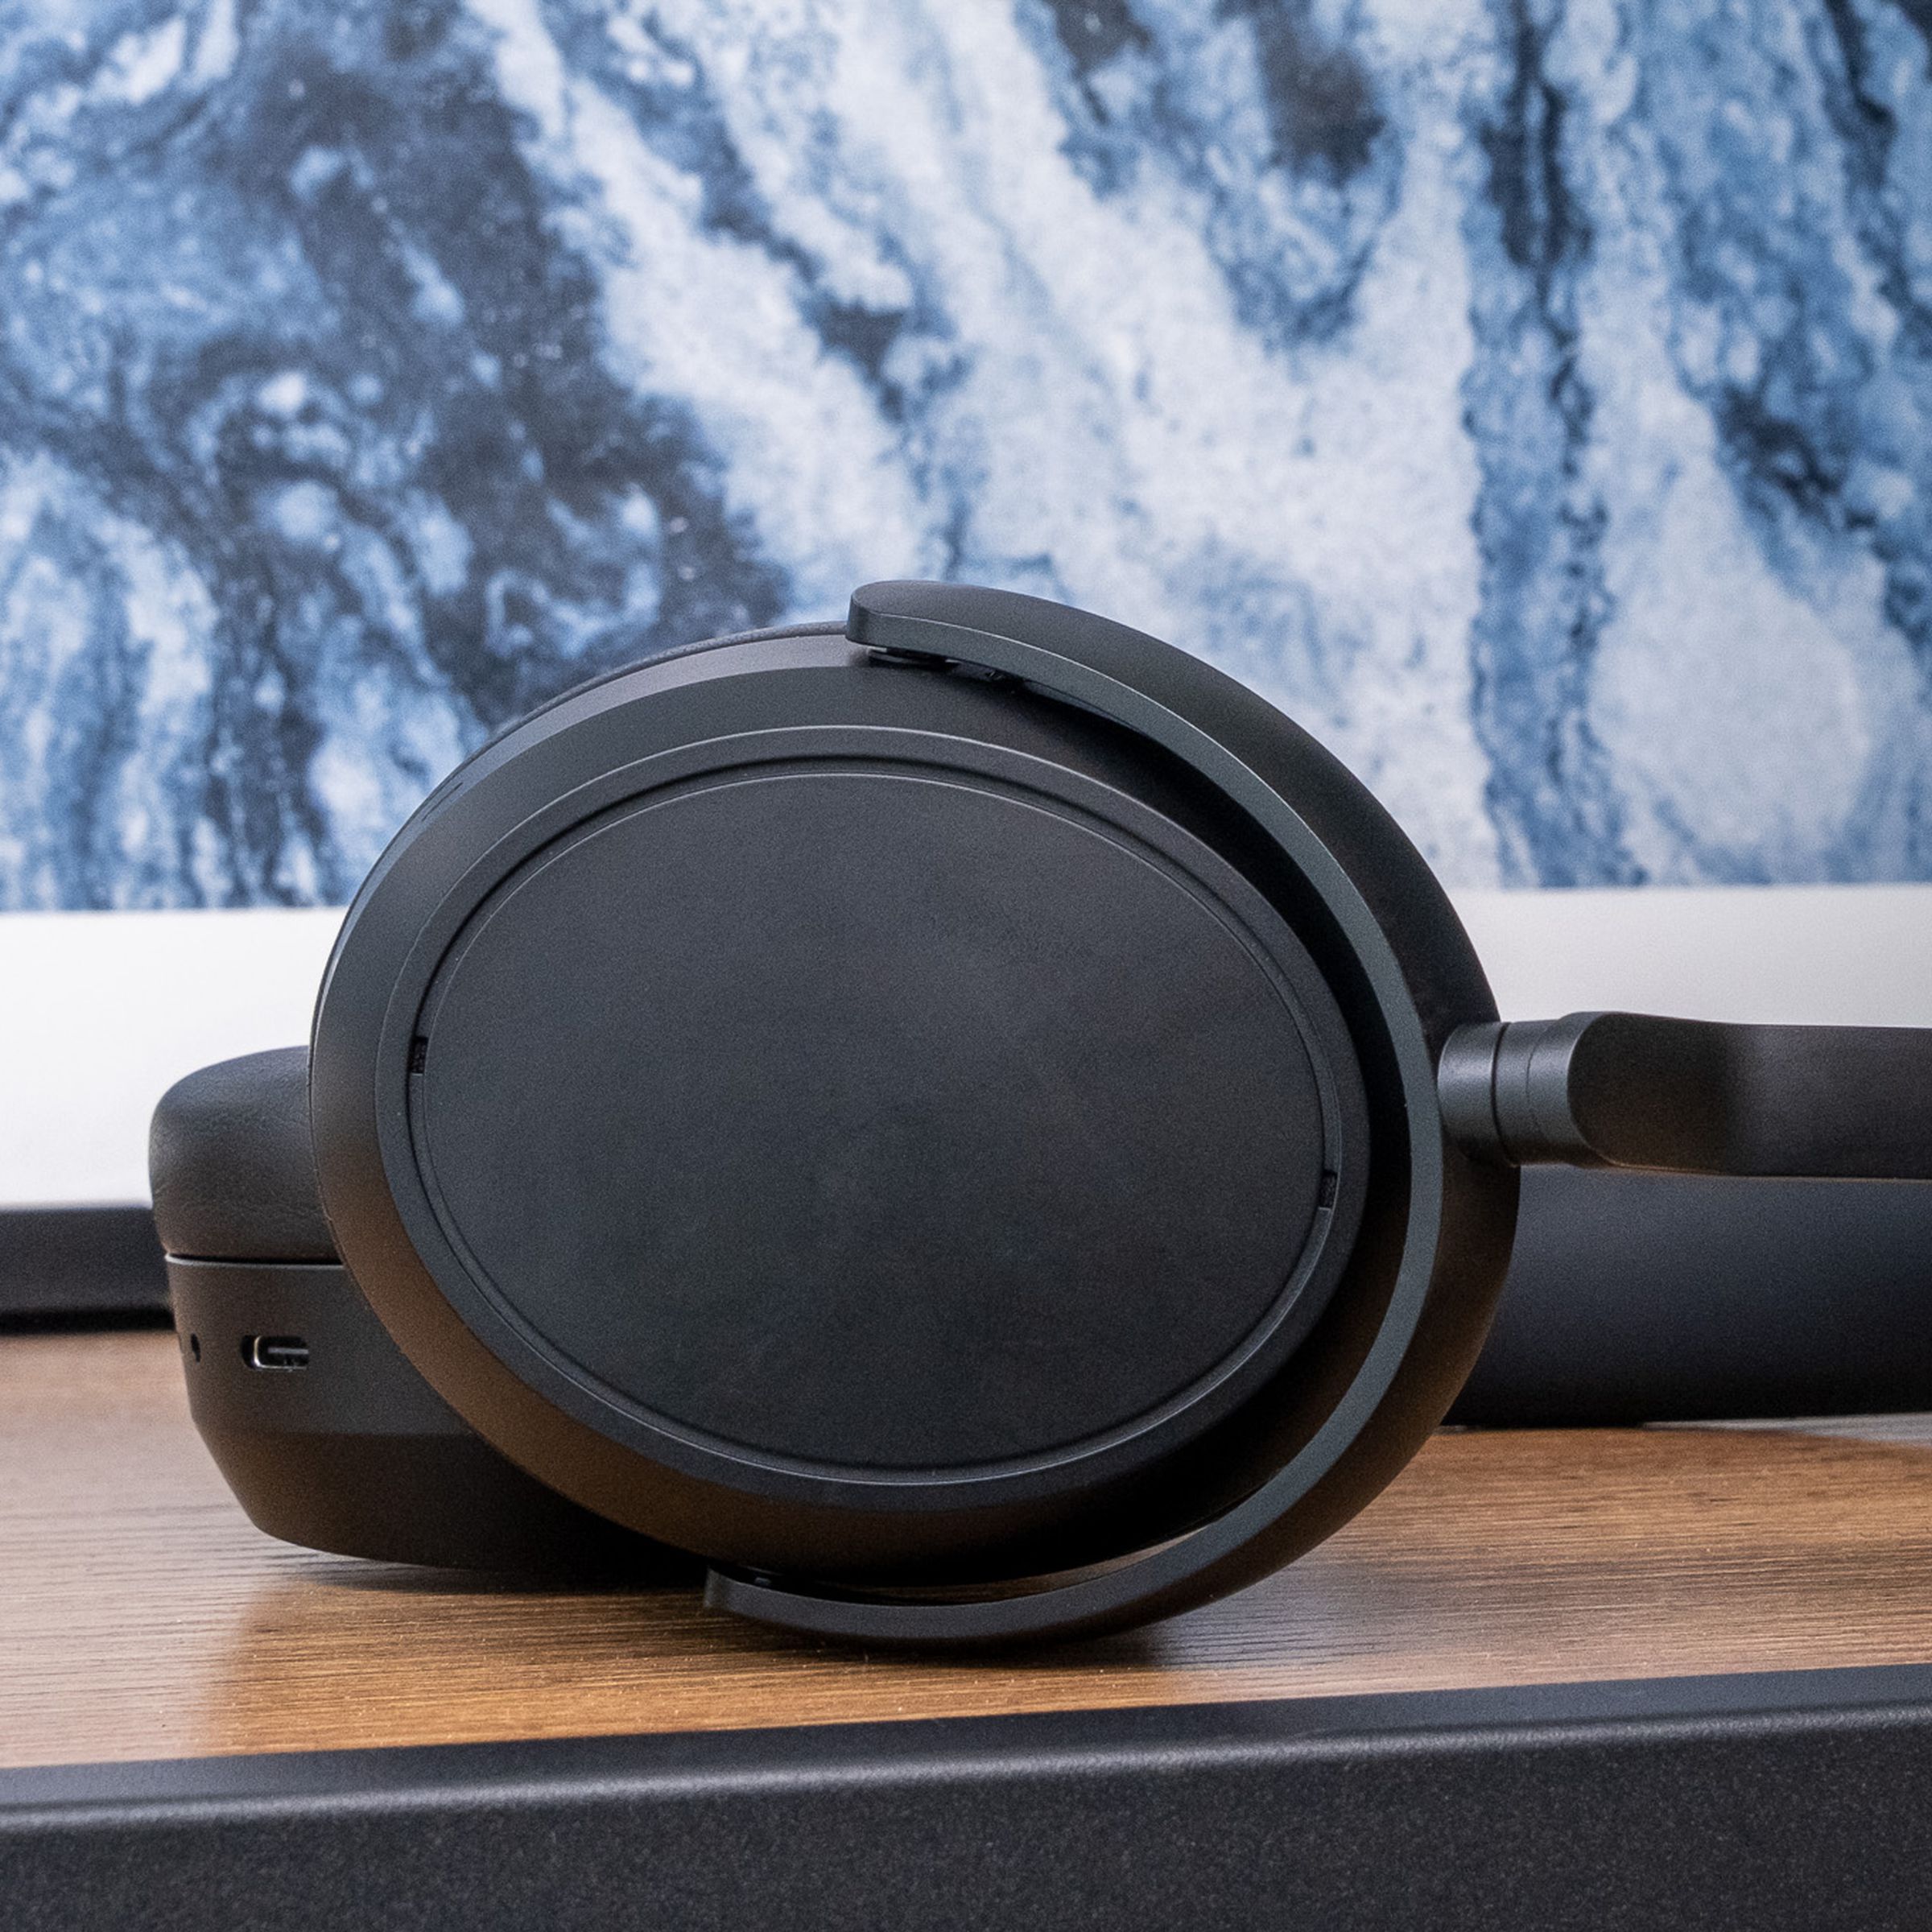 A photo of Sennheiser's Momentum 4 Wireless headphones on a table.